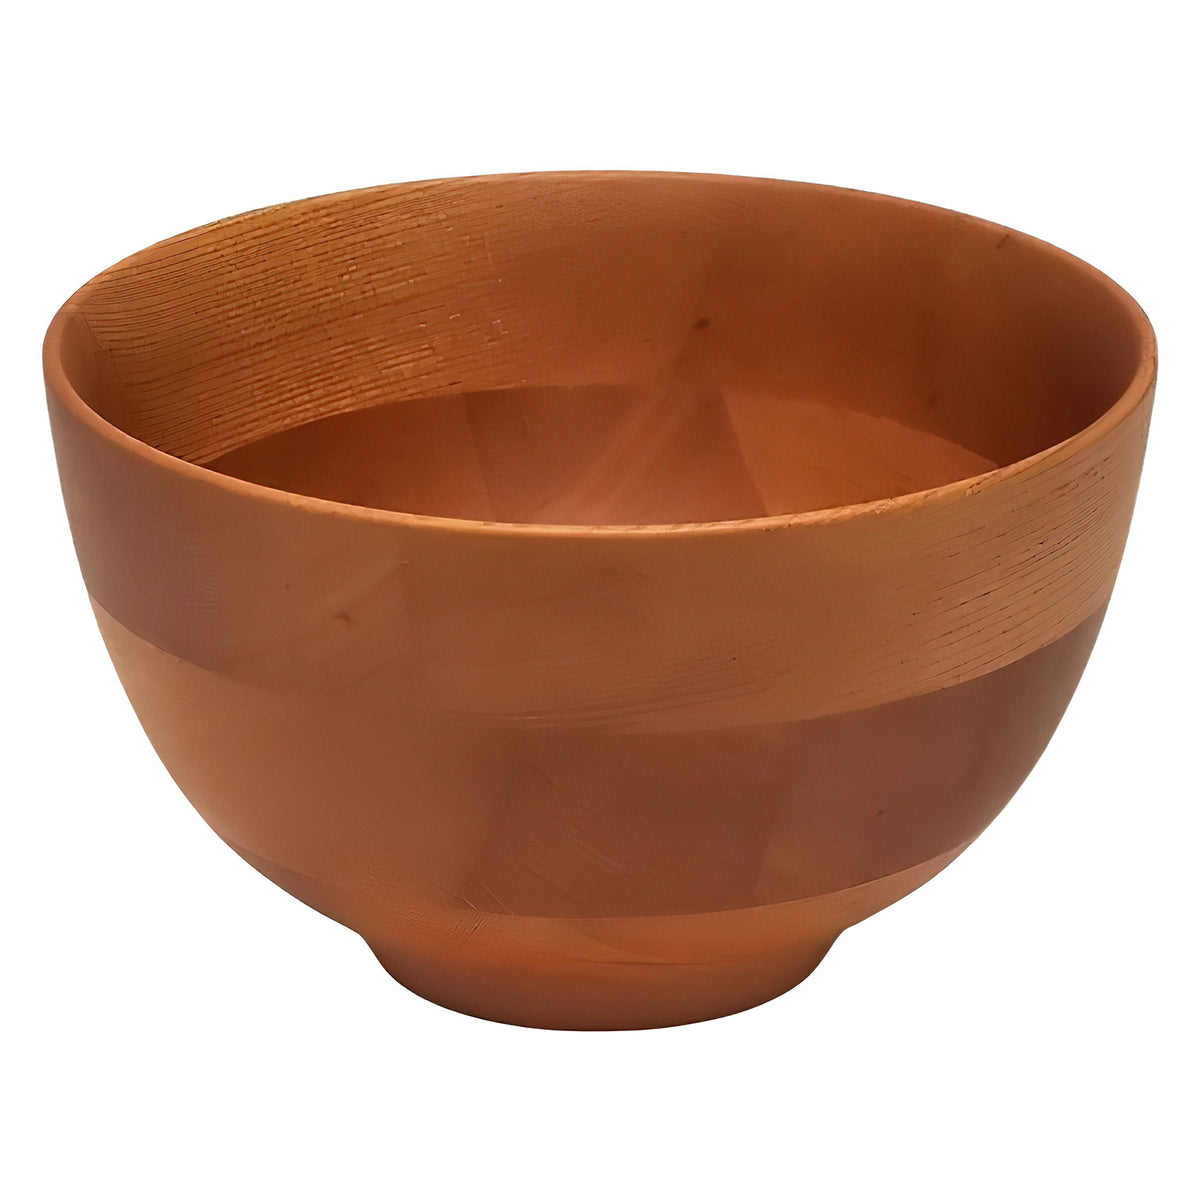 La Luz Yosegi DON Wooden Bowl Rei